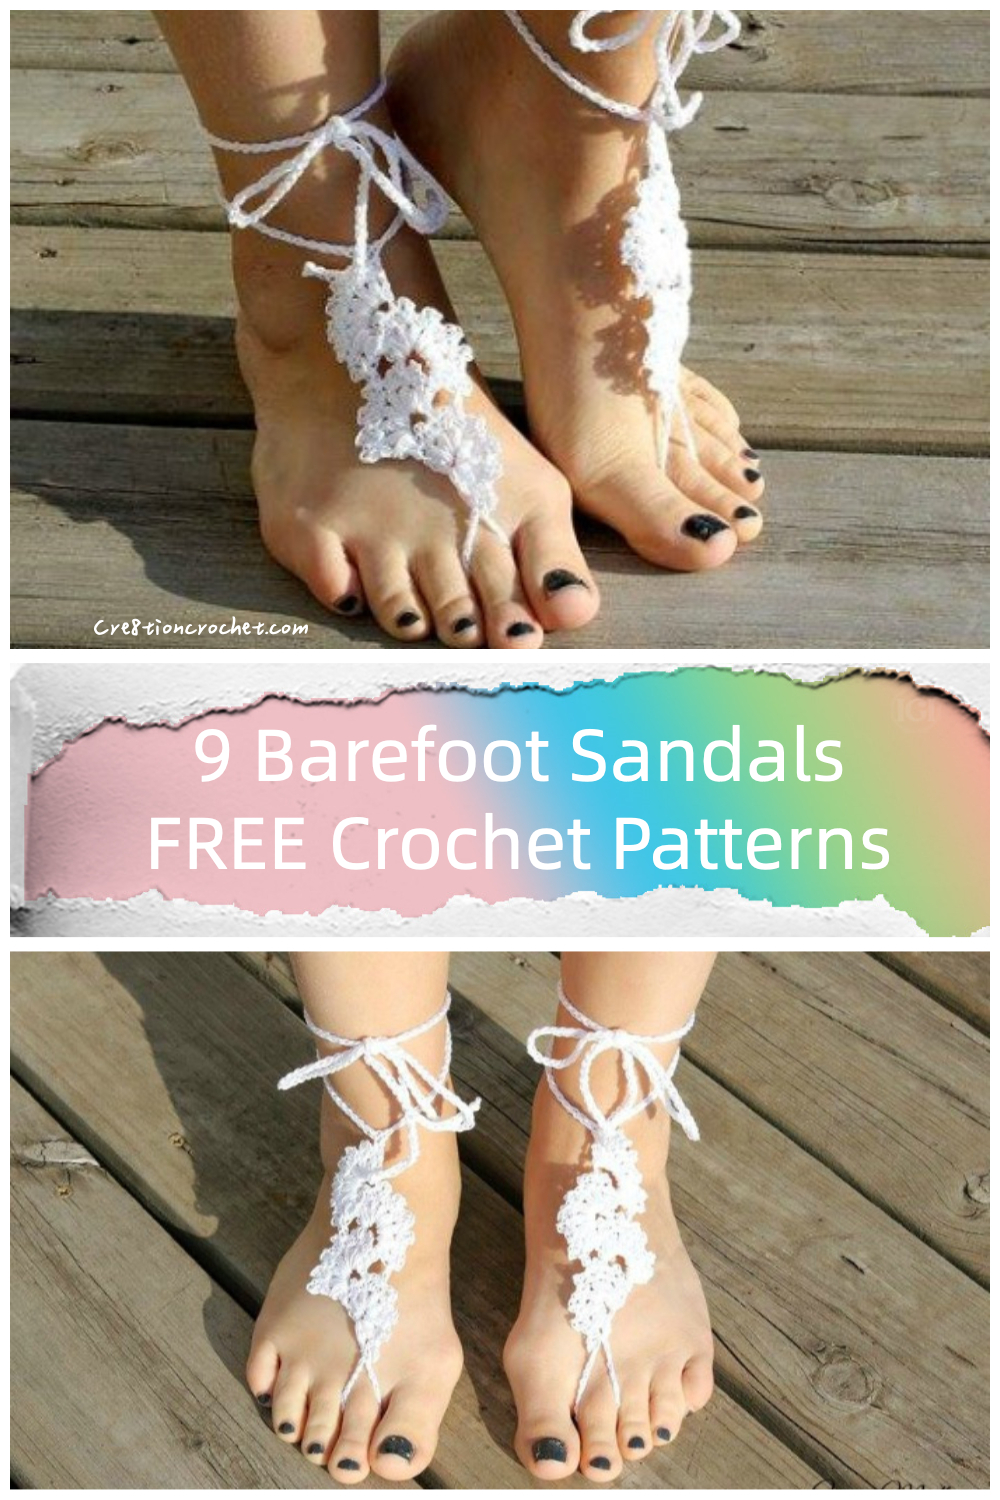 9 Barefoot Sandals FREE Crochet Patterns   